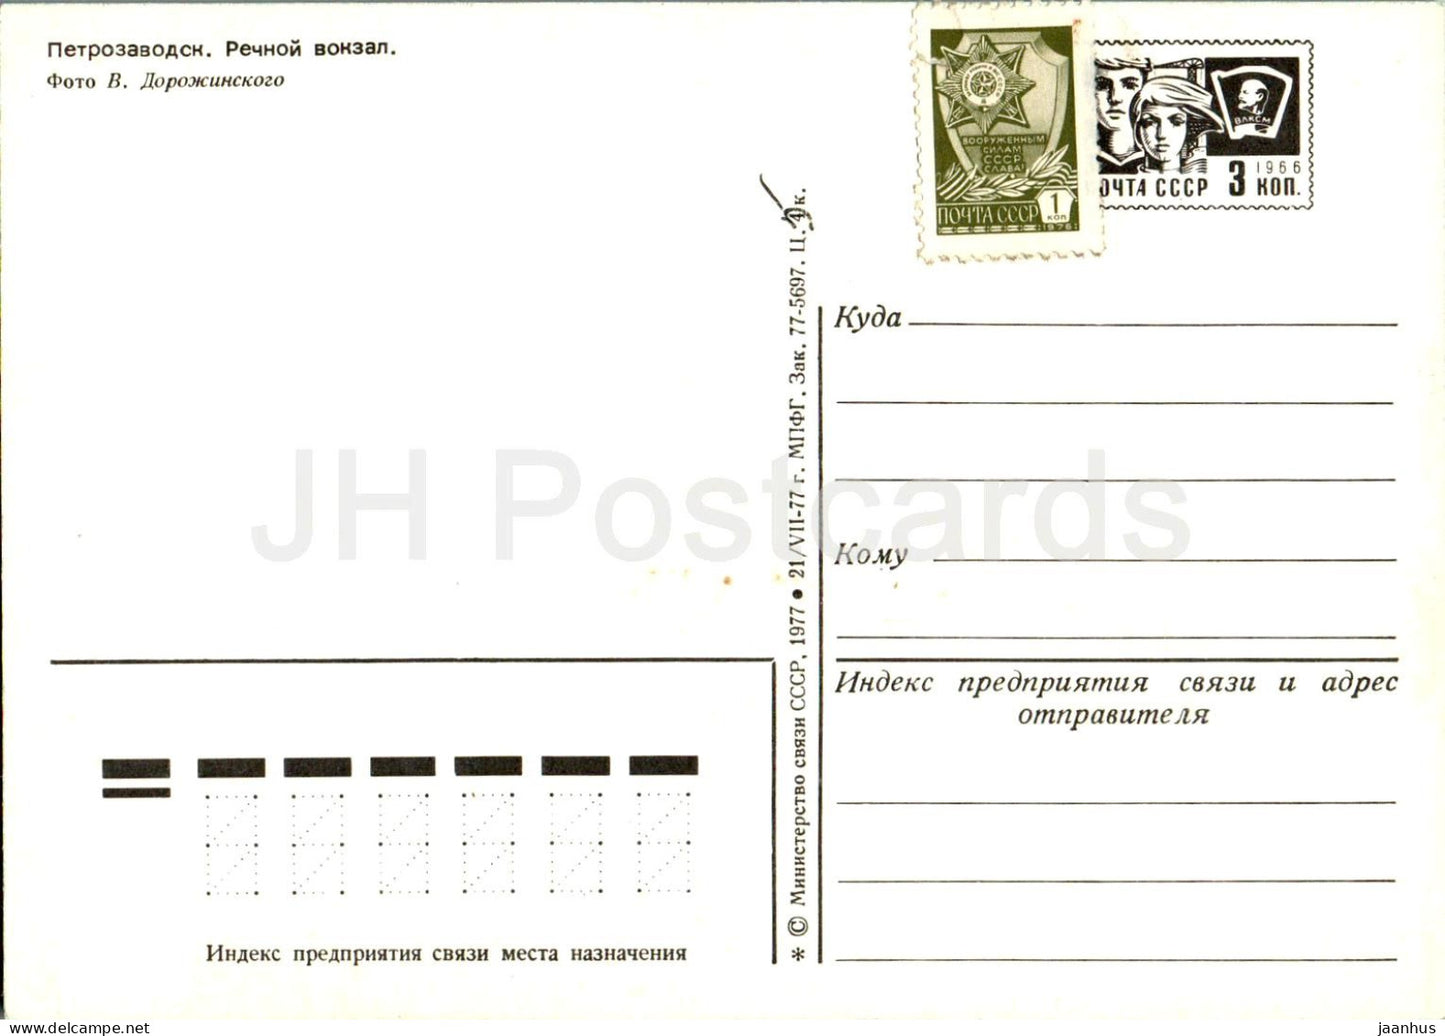 Petrozavodsk - River station - postal stationery - 1977 - Russia USSR - unused